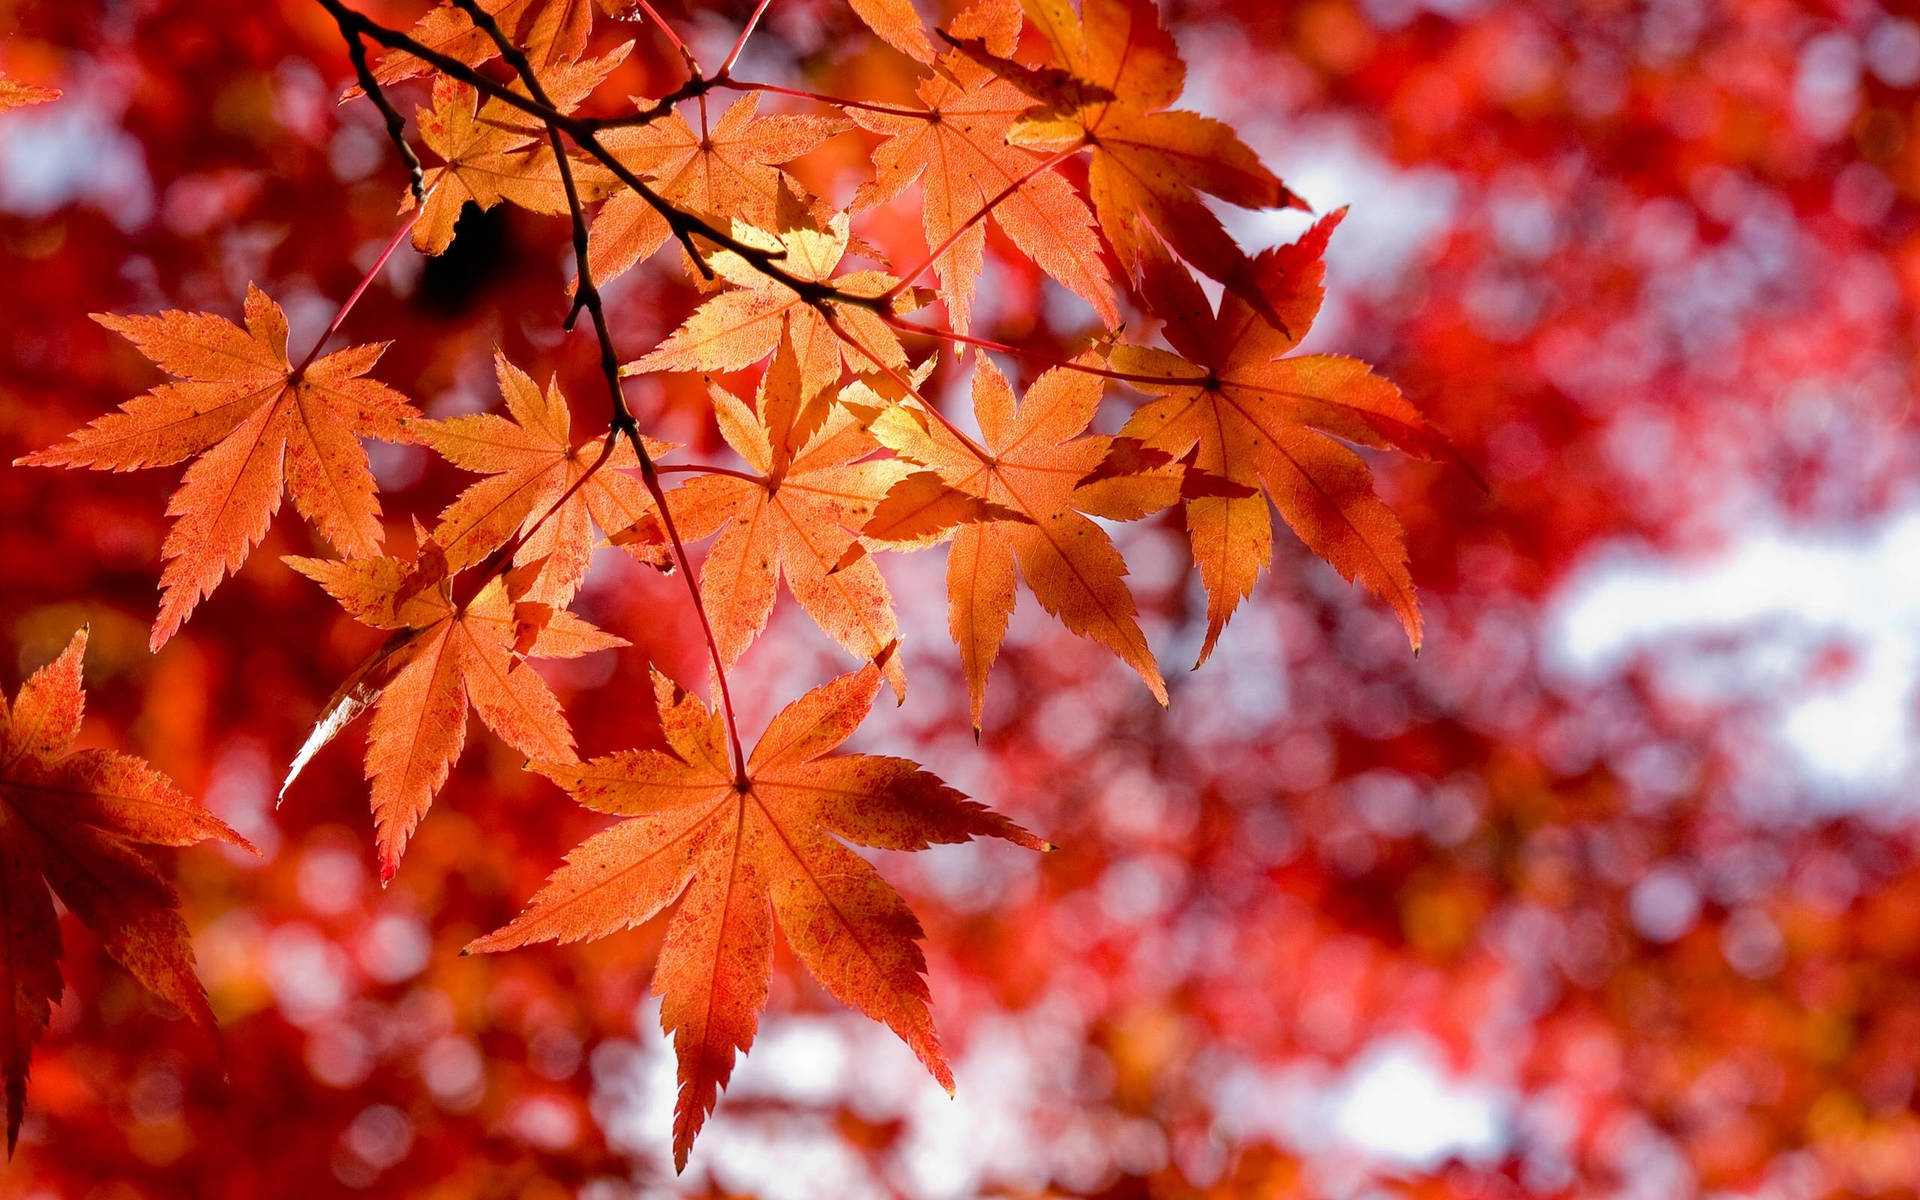 Aesthetic Fall Orange Maple Tree Wallpaper